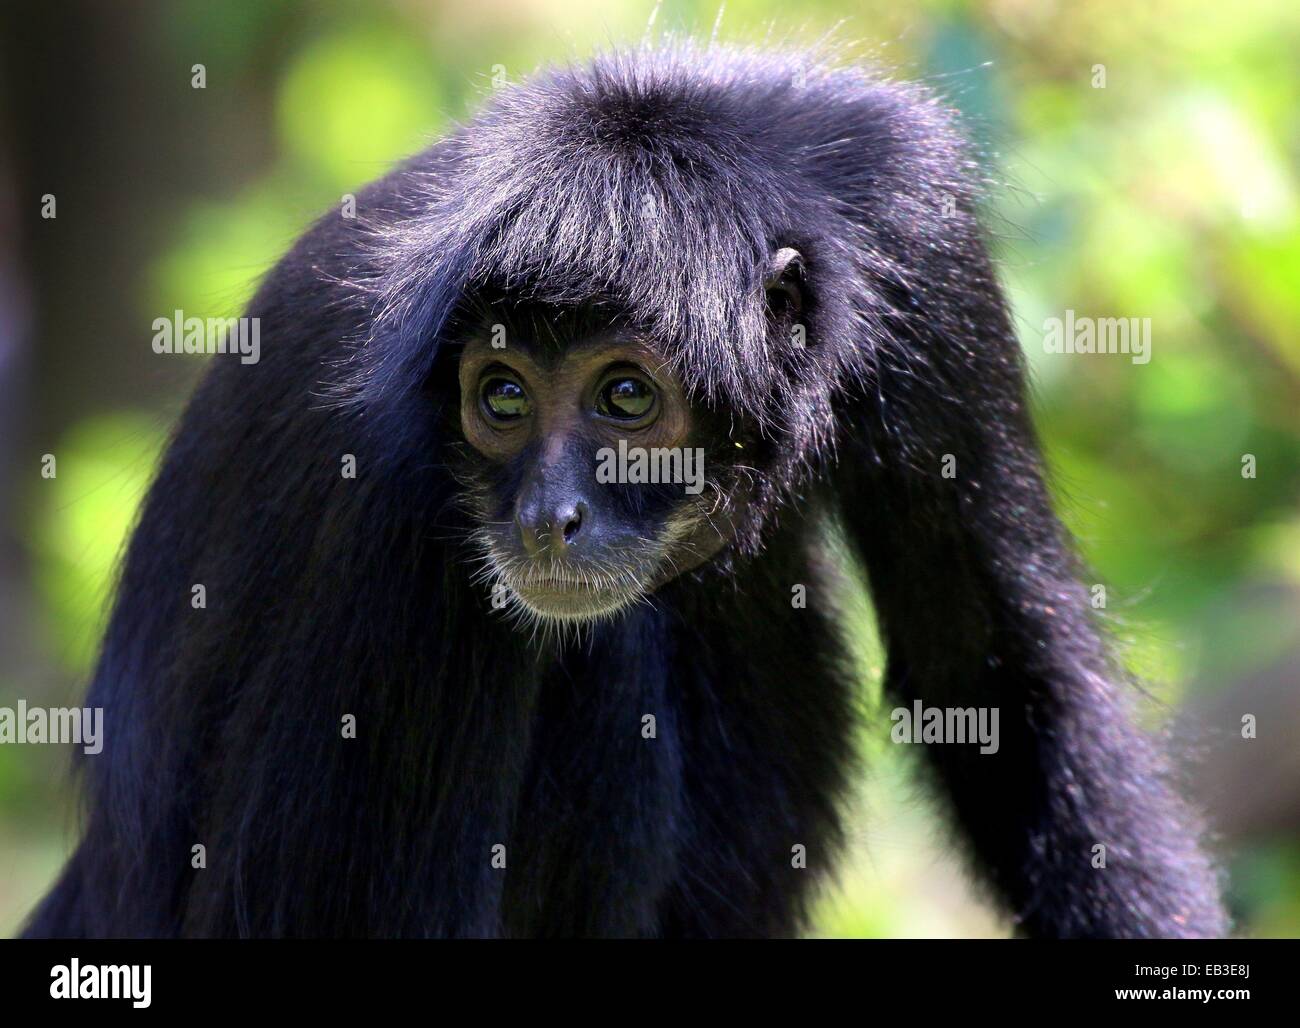 Close-up retrato de un colombiano de cabeza negra mono araña ( Ateles fusciceps robustus) Foto de stock